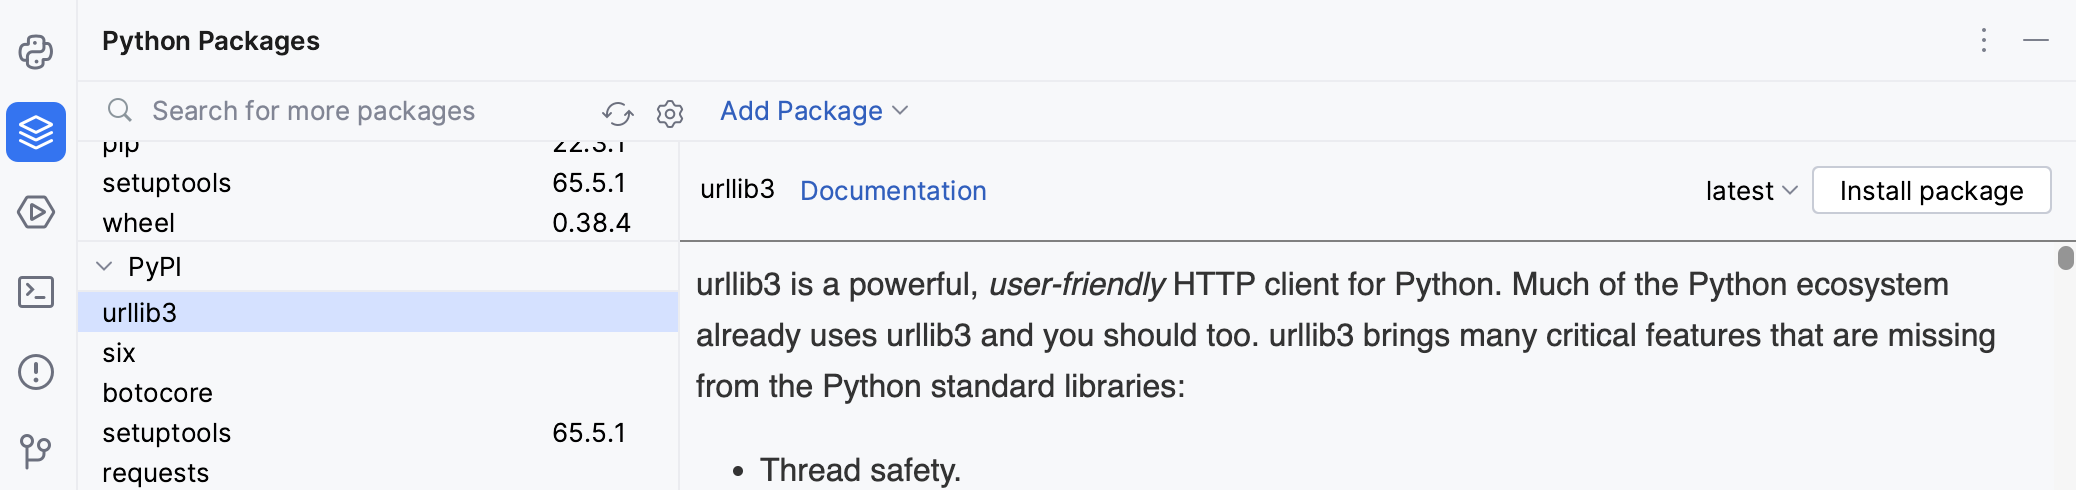 Python Package tool window